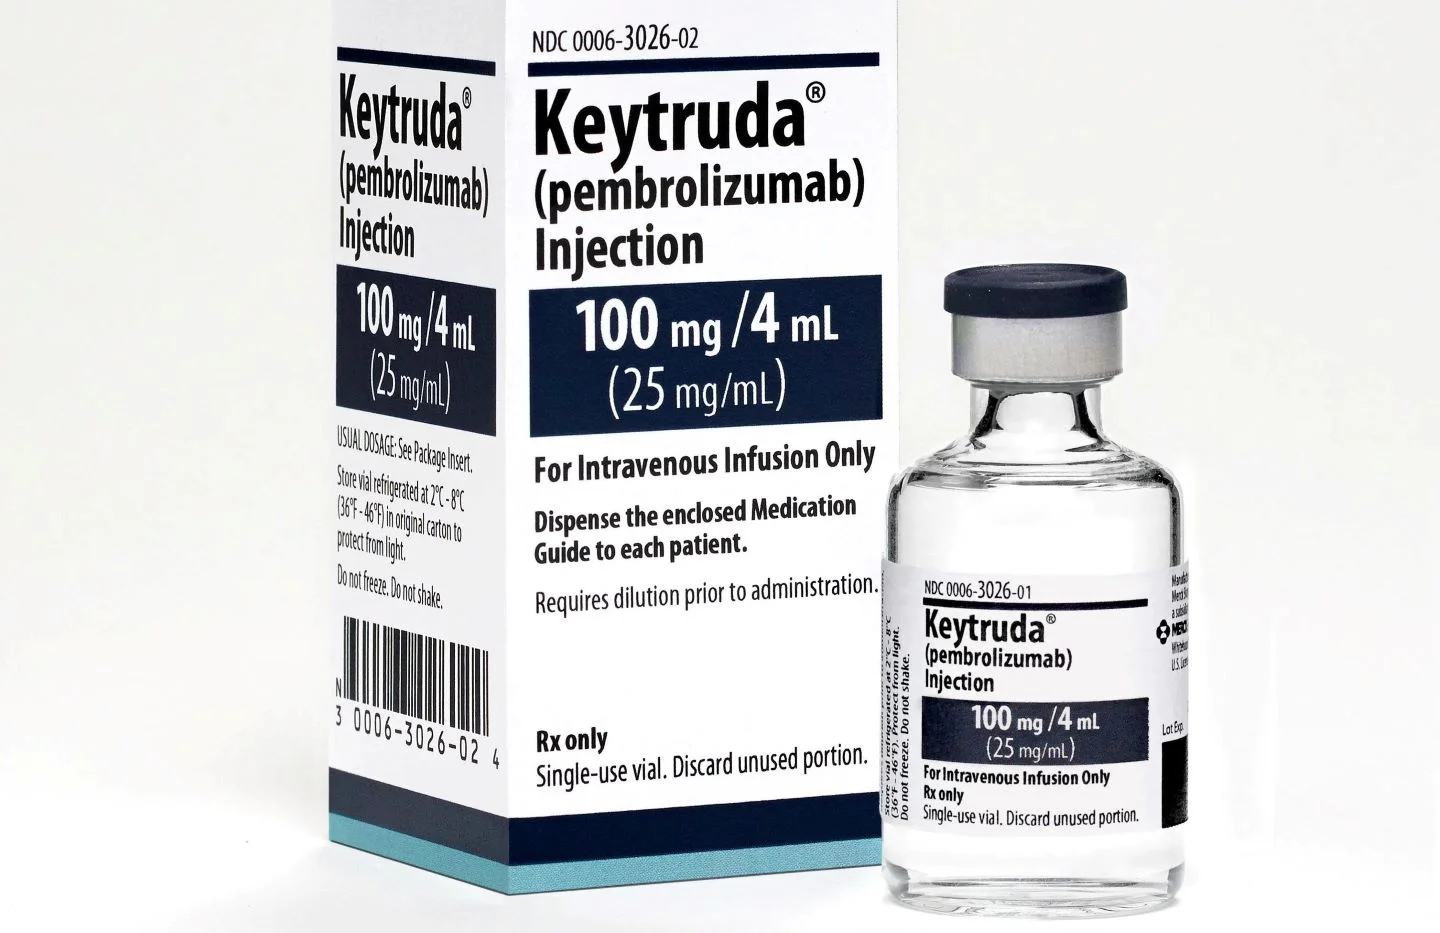 Keytruda - Popular drugs manufactured by Merck